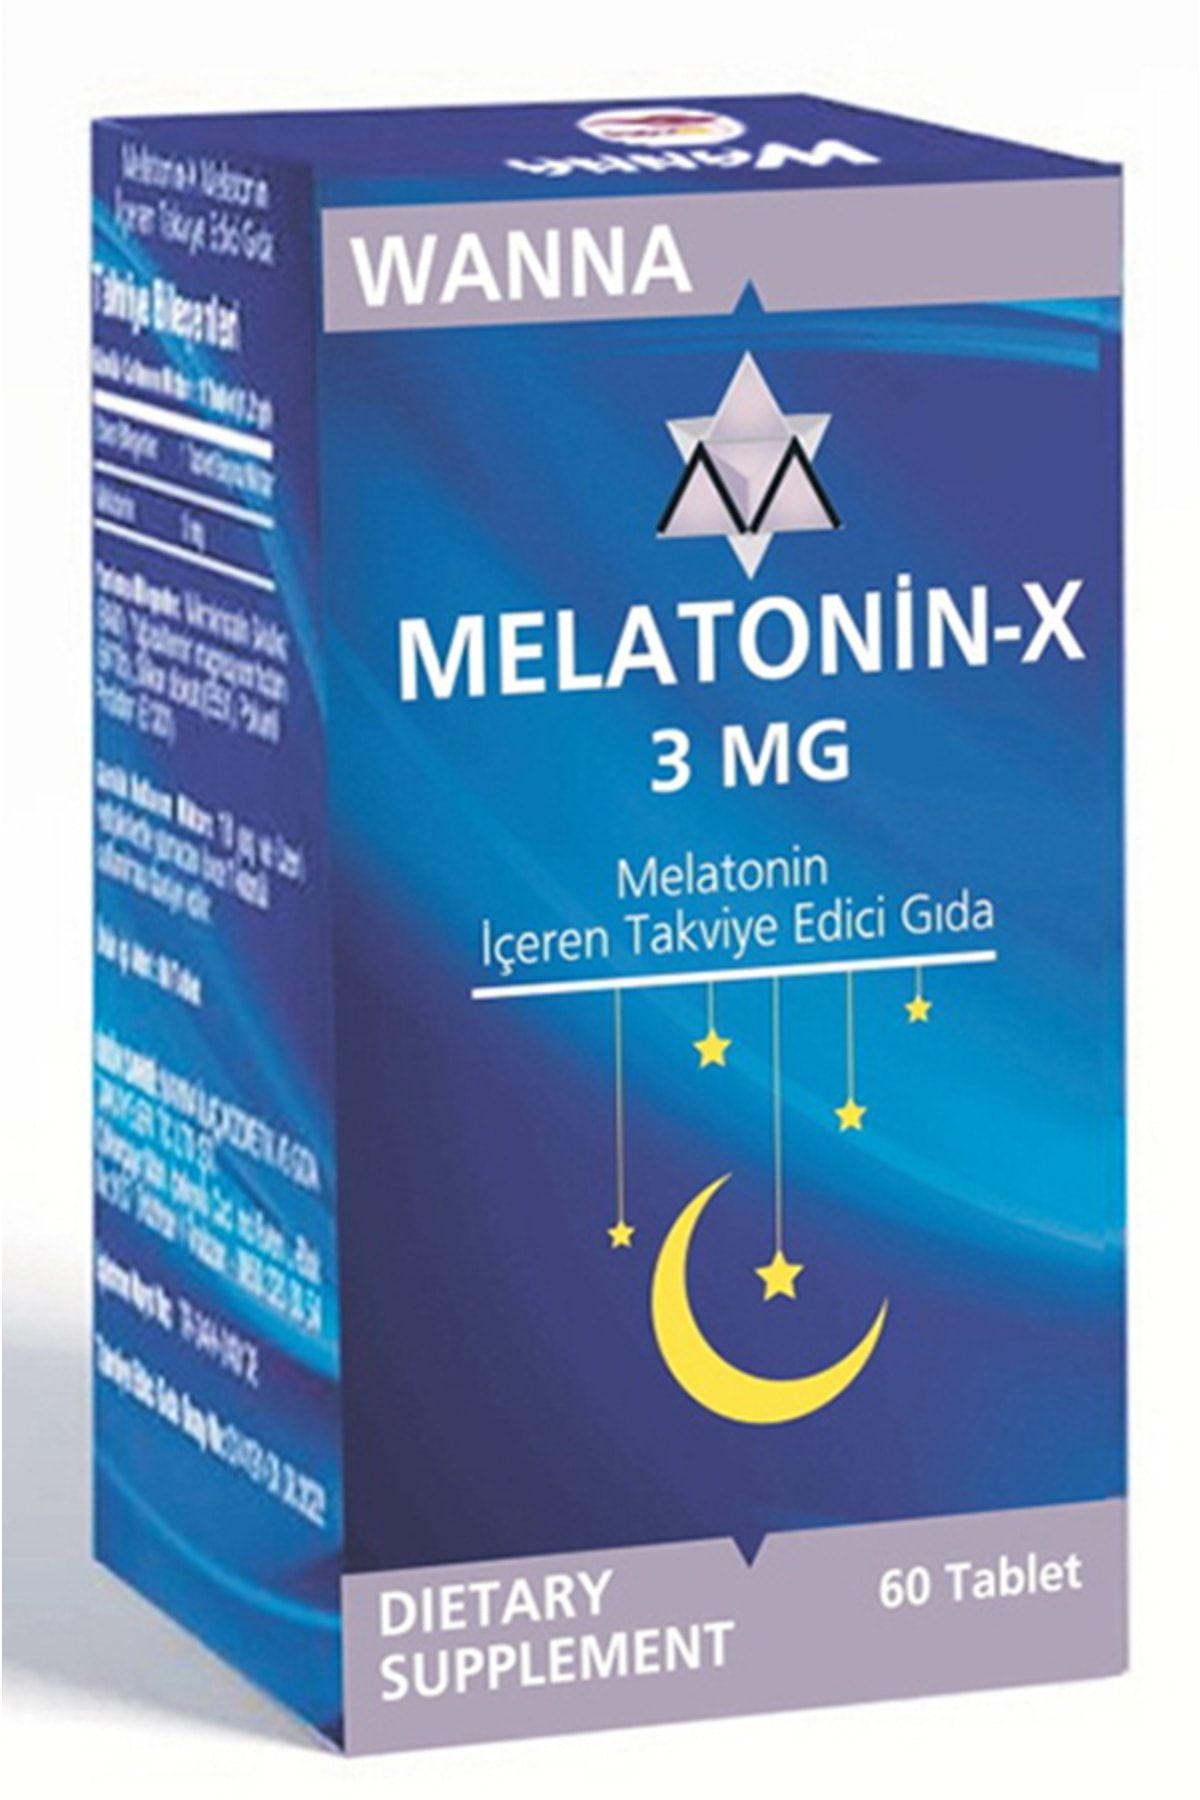 WANNA Melatonin-x 3 Mg 60 Tablet